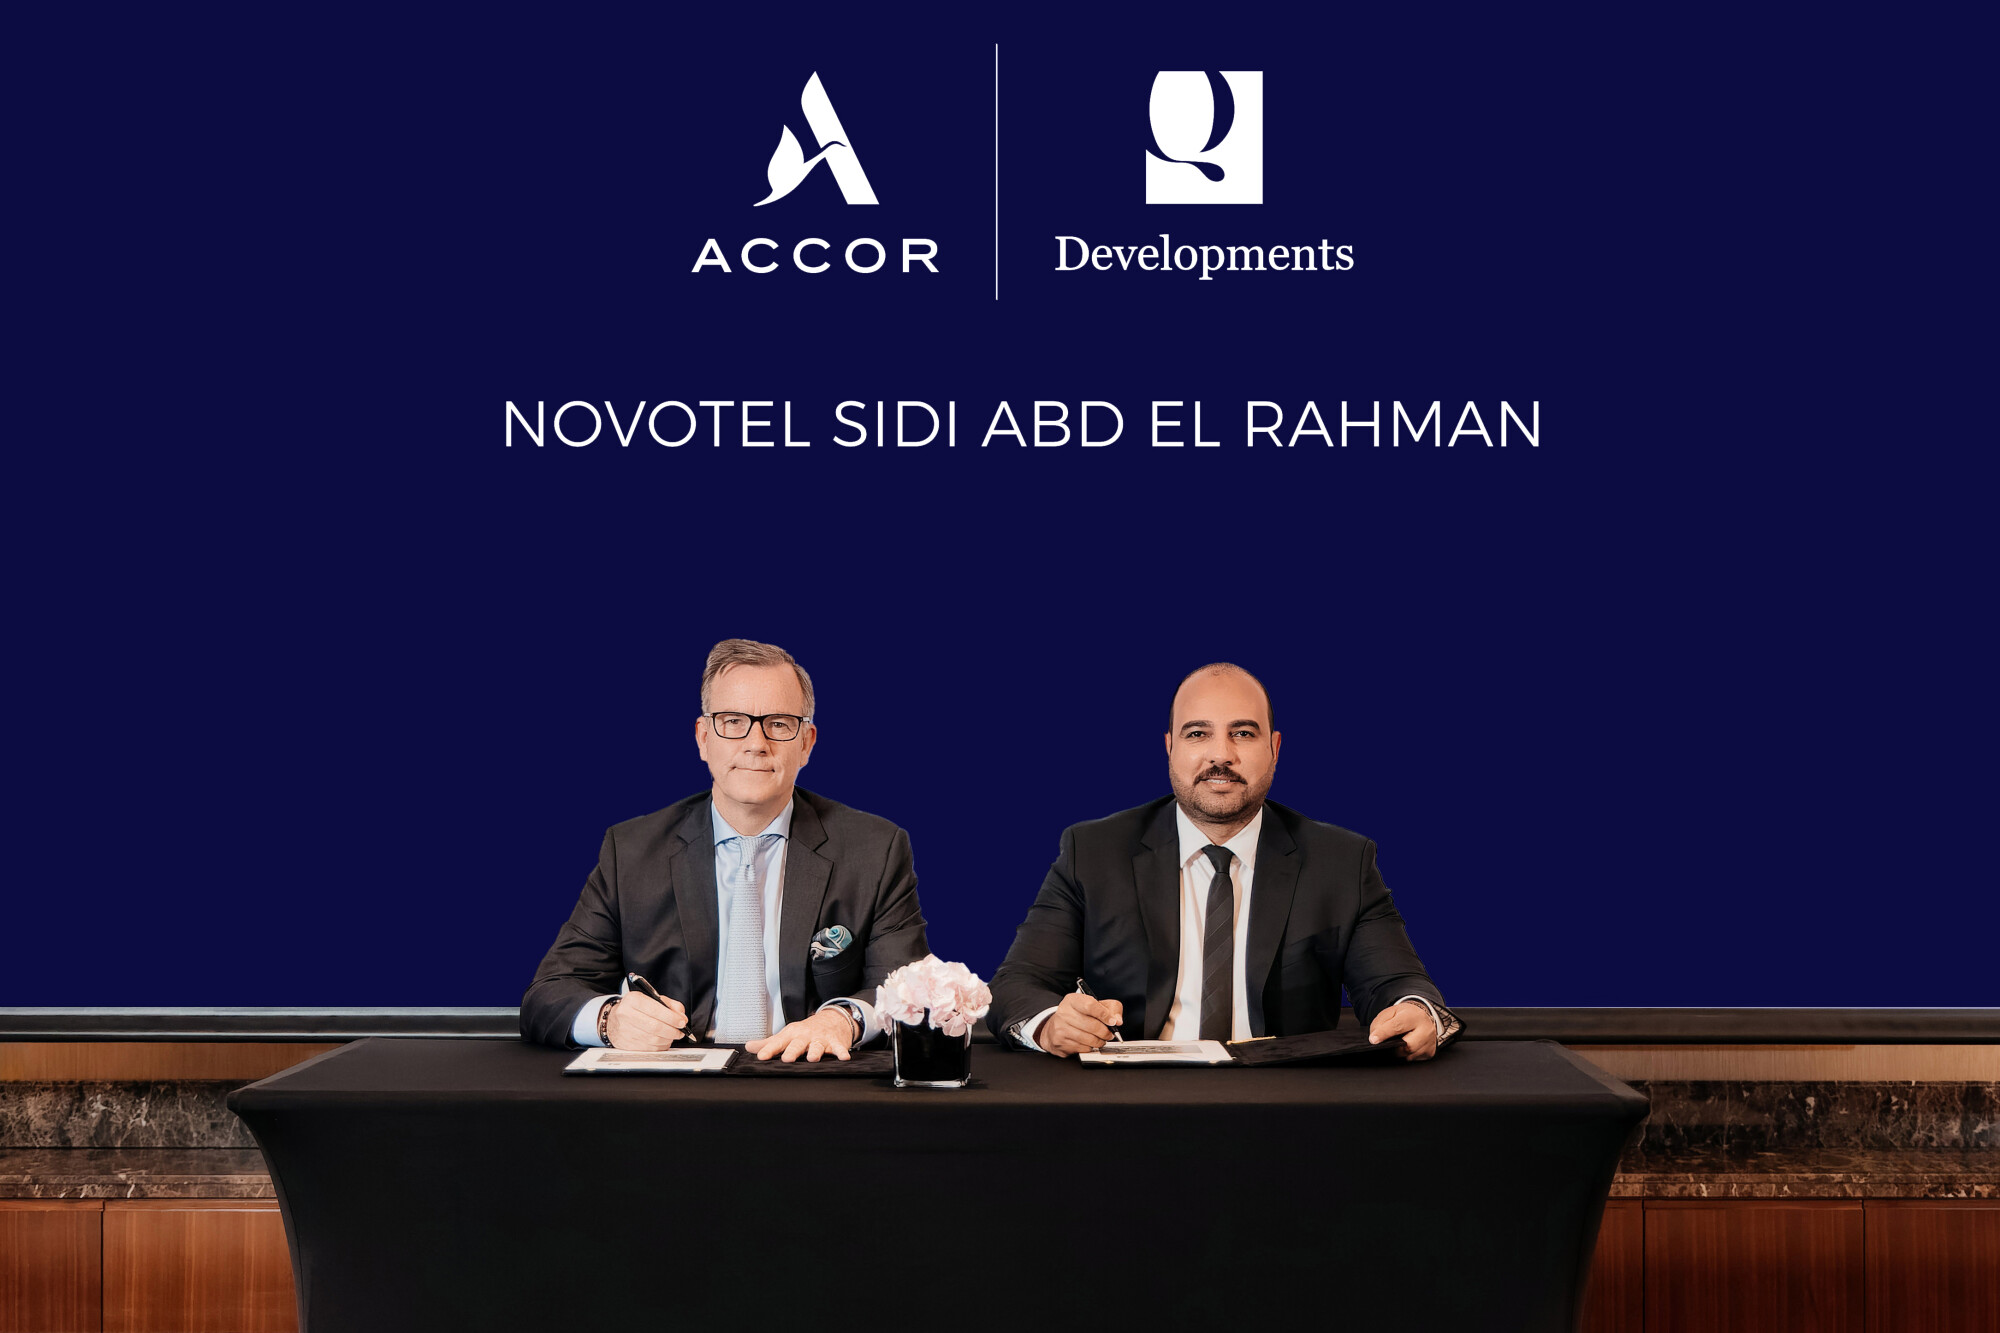 Accor and Q Development partnership